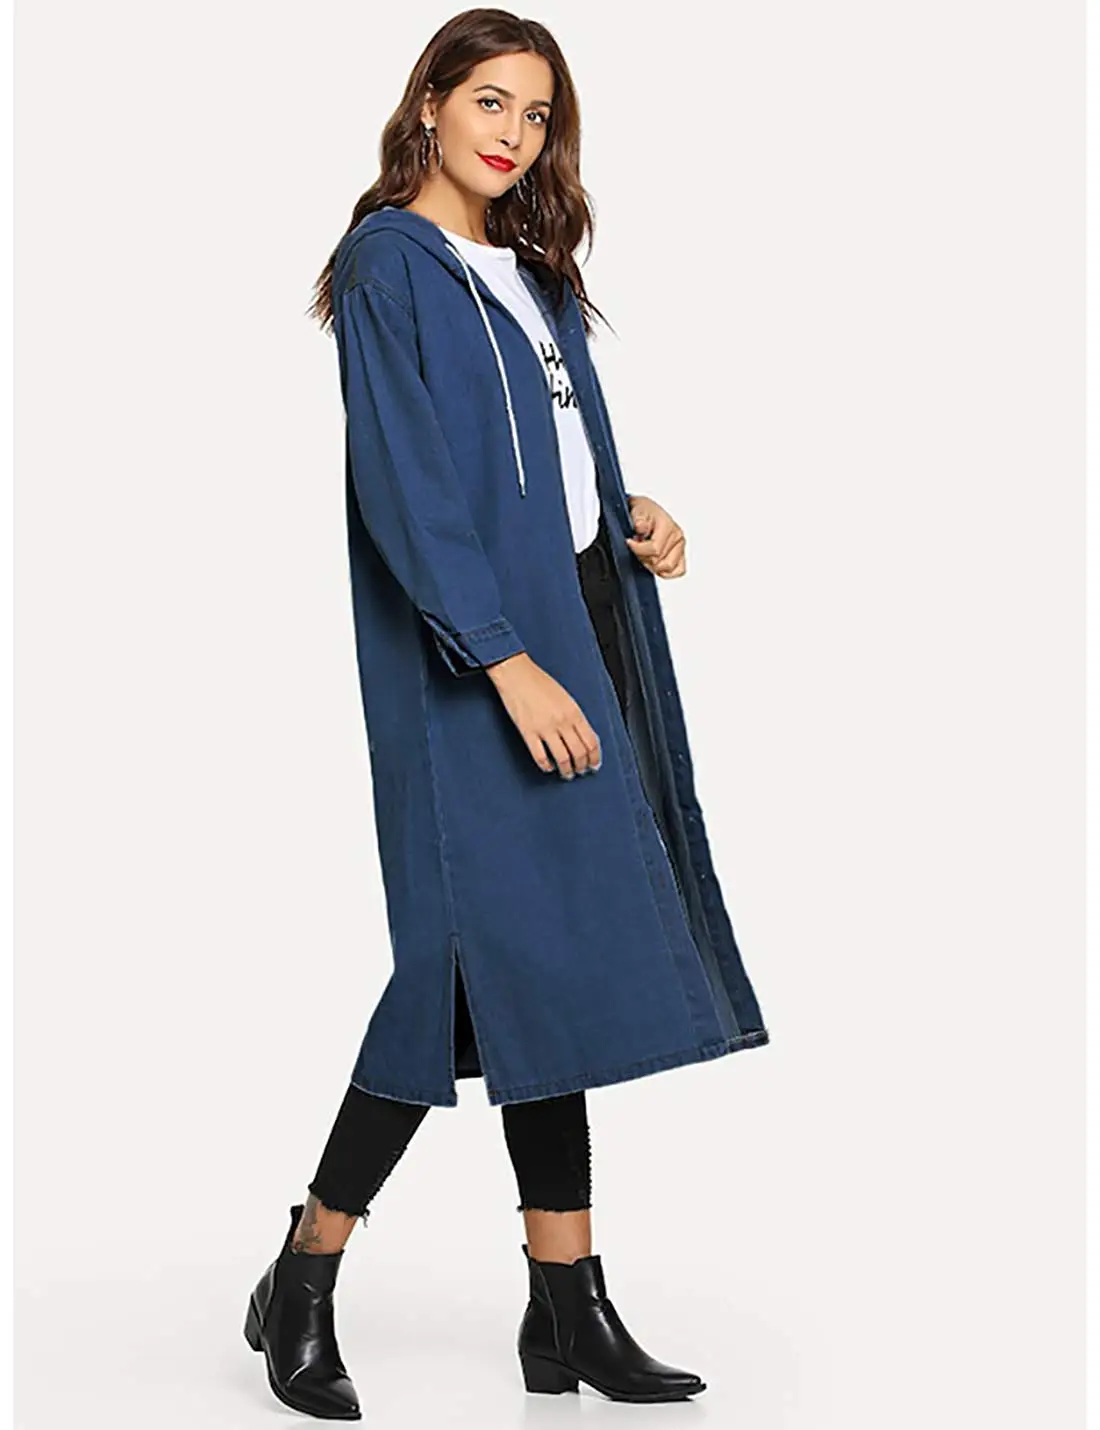 Yeokou Womens Casual Slim Mid Long Denim Jean Windbreaker Jacket Trench Coat